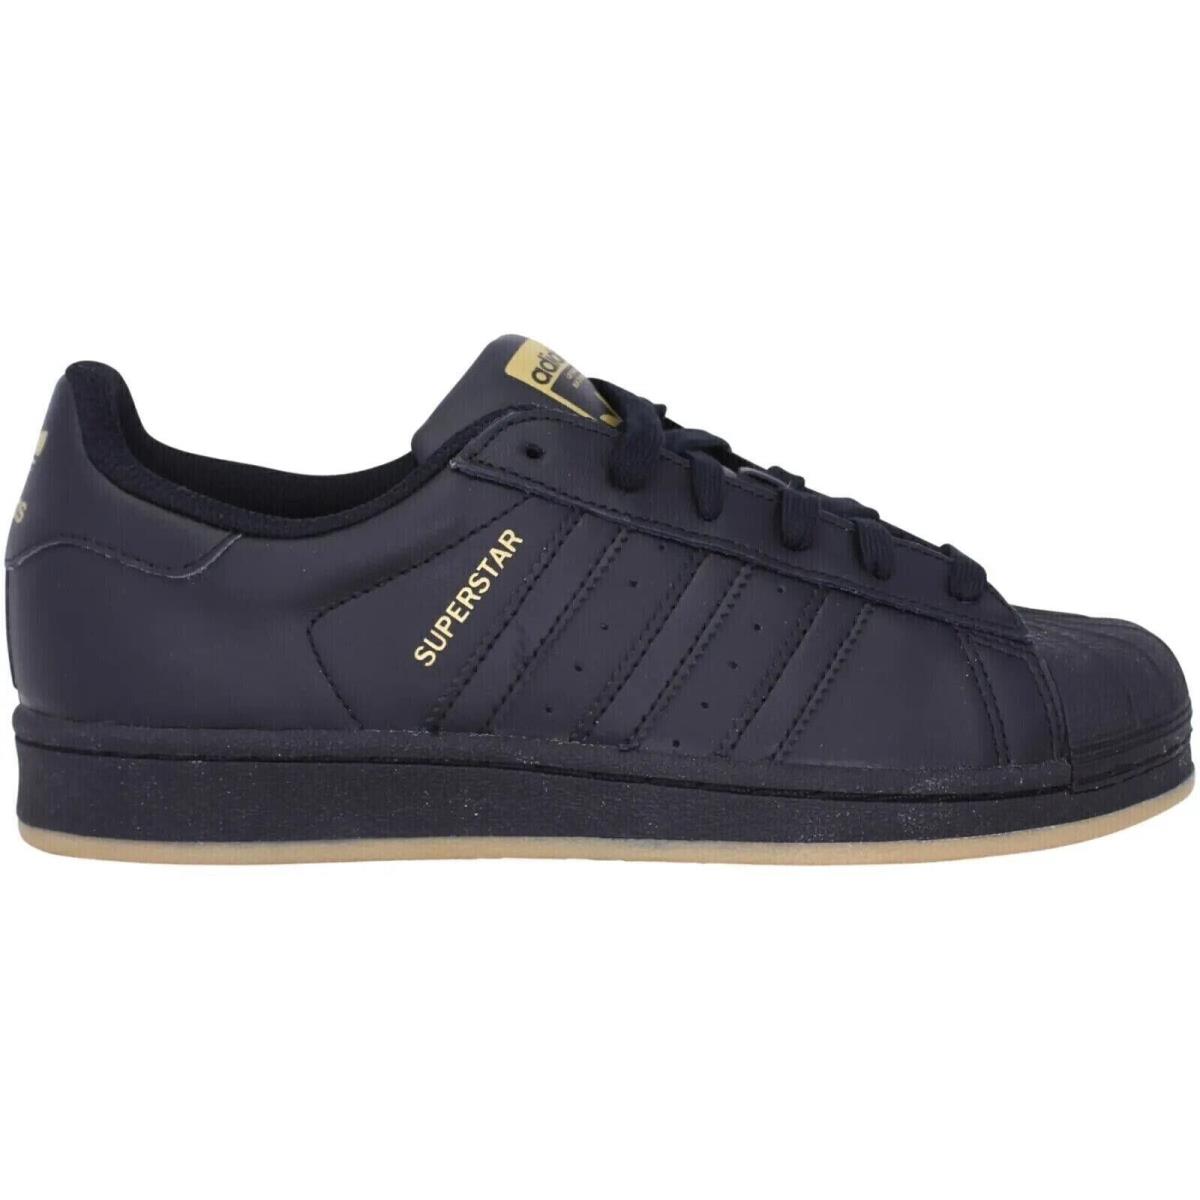 Adidas Superstar BY4358 Men`s Black Gum Leather Running Sneaker Shoes HS4604 - Black